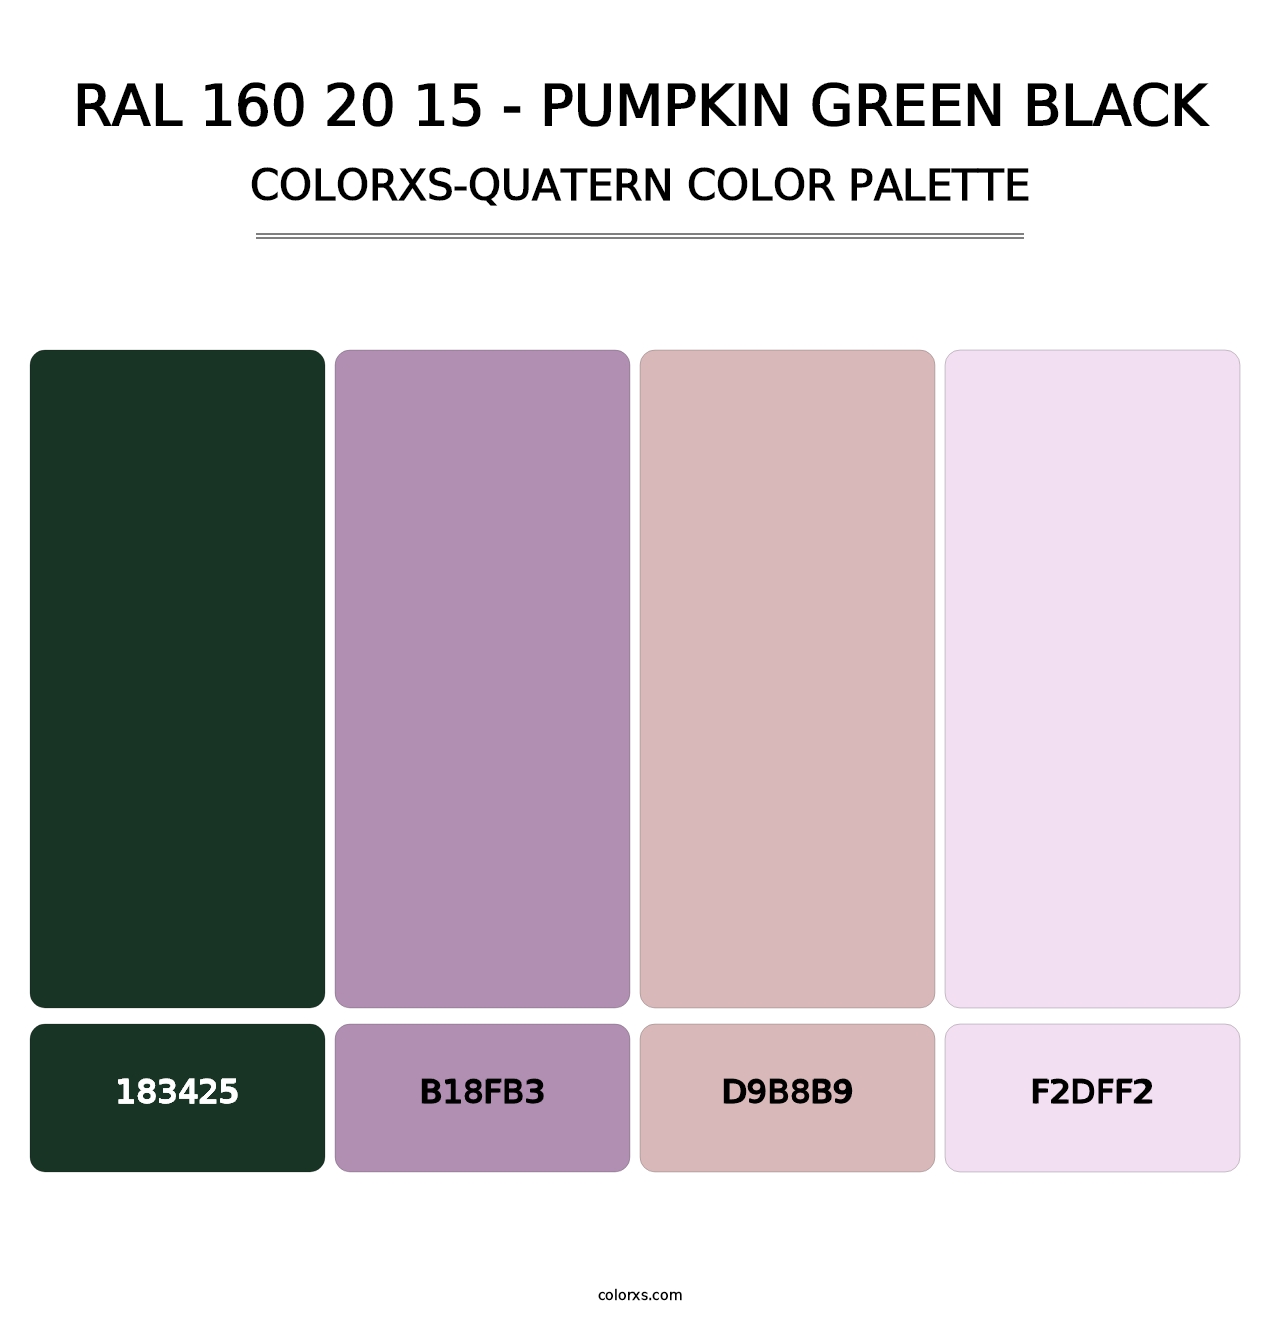 RAL 160 20 15 - Pumpkin Green Black - Colorxs Quatern Palette